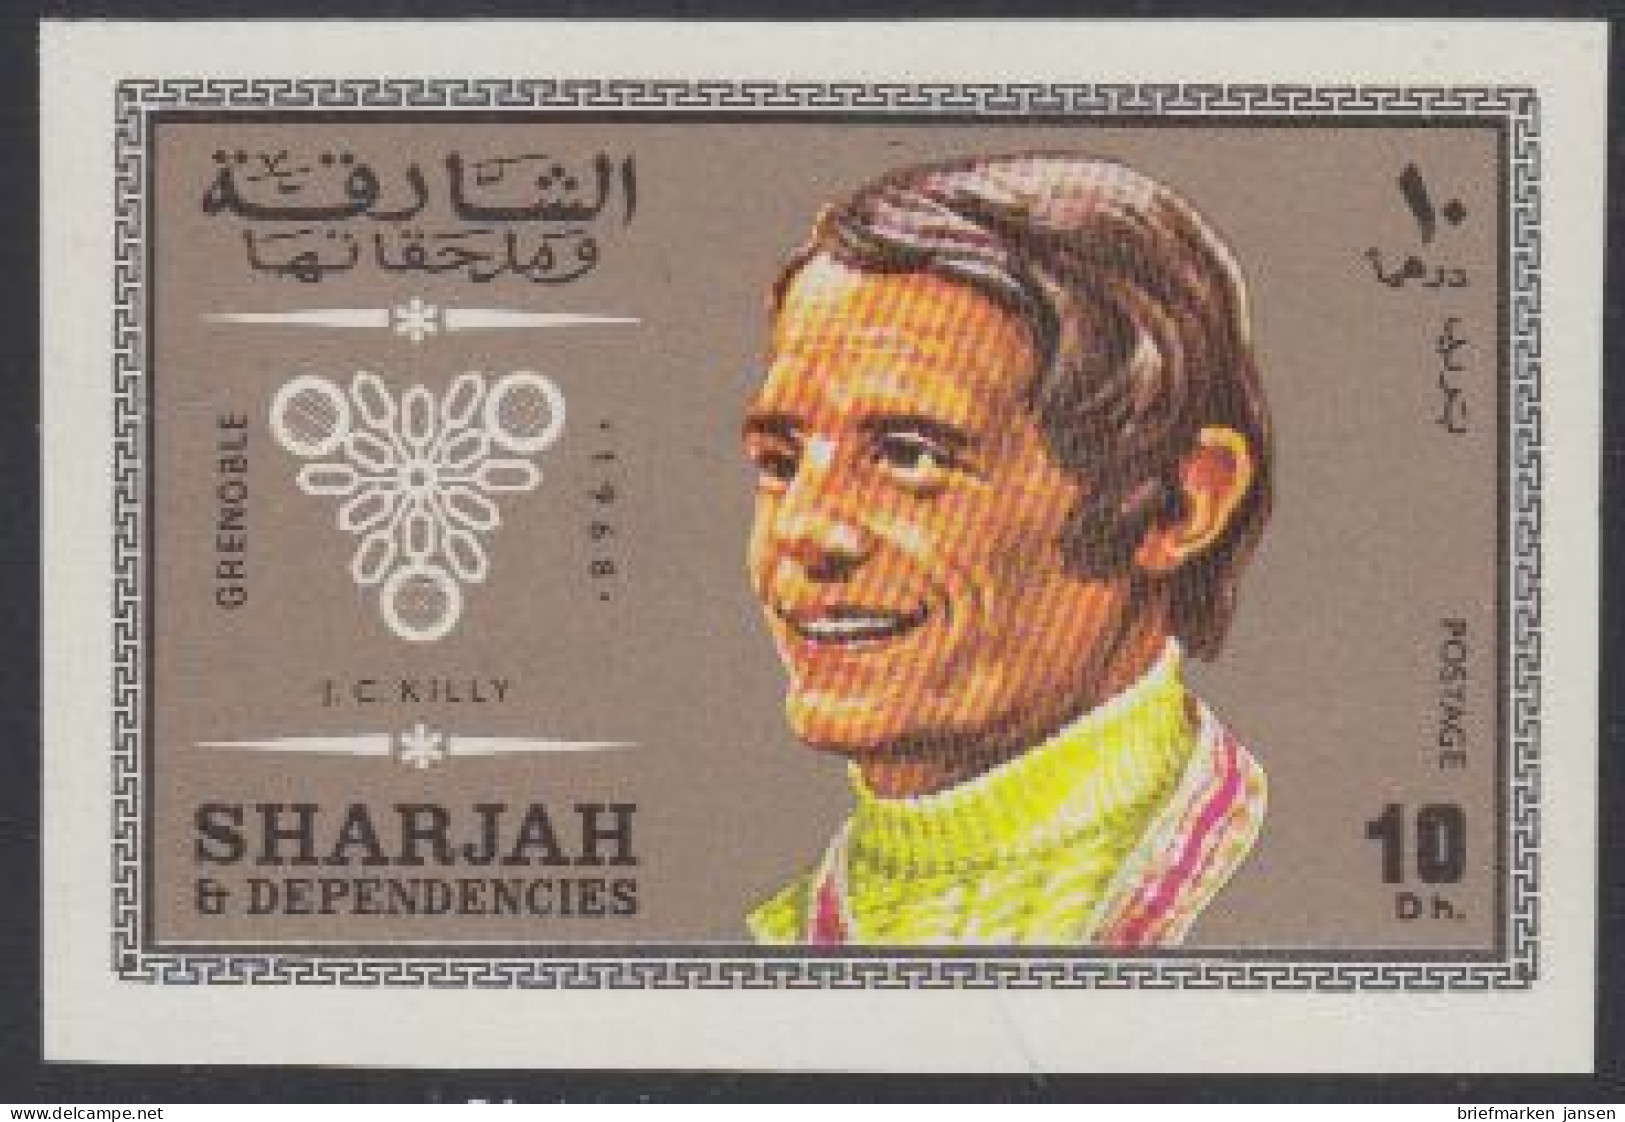 Sharjah Mi.Nr. 527B Olympia 1968 Grenoble. J.C. Killy (10) - Sharjah